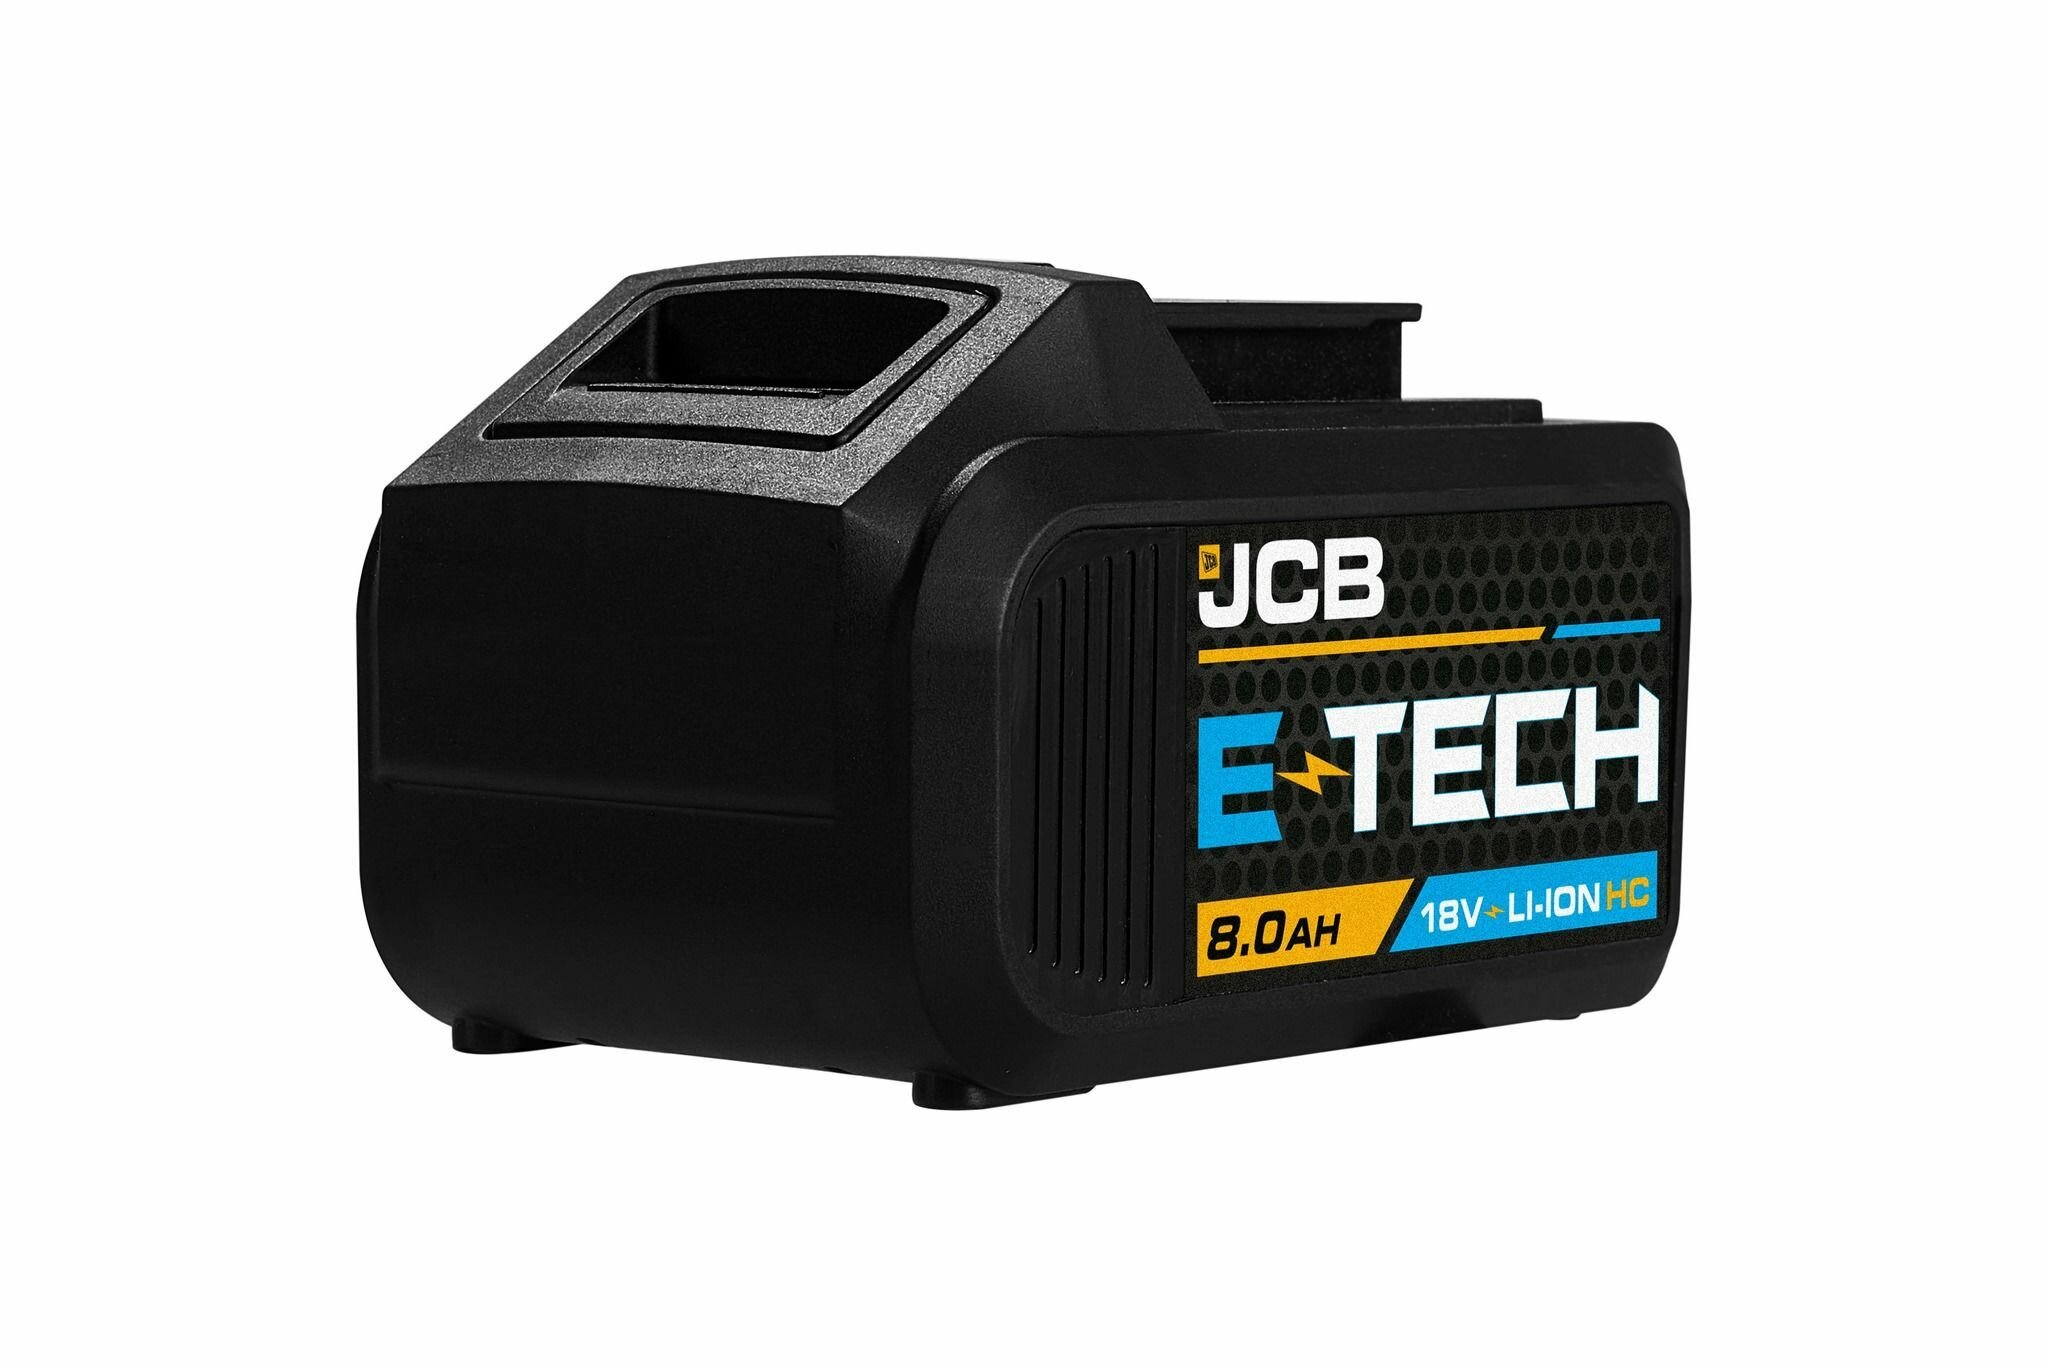 Батарея аккумуляторная 18V 8.0AH, LI-ion JCB JCB-80LI-HC-E